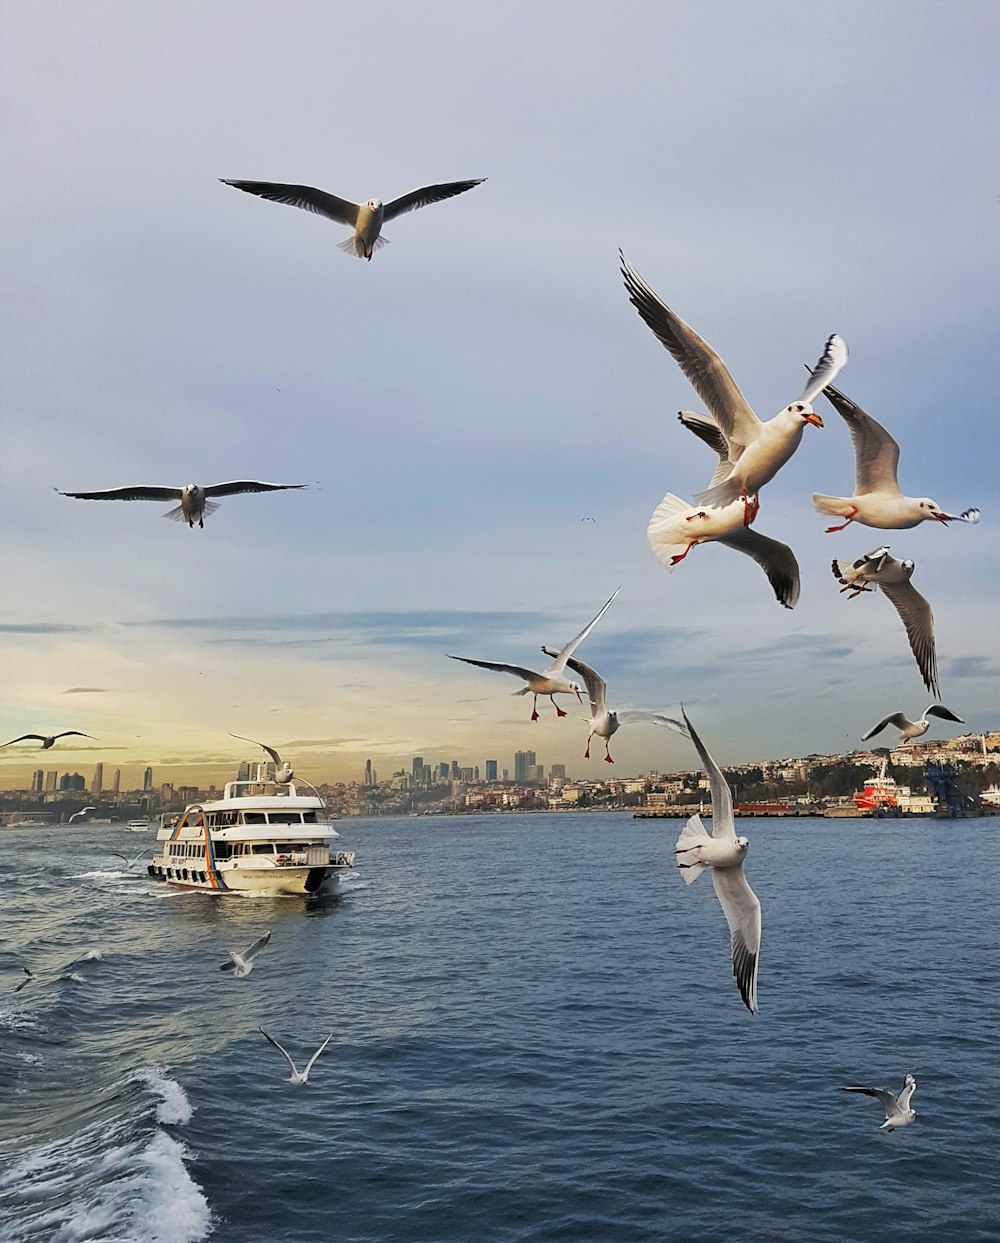 gaivotas pairando sobre o mar perto do barco durante o dia